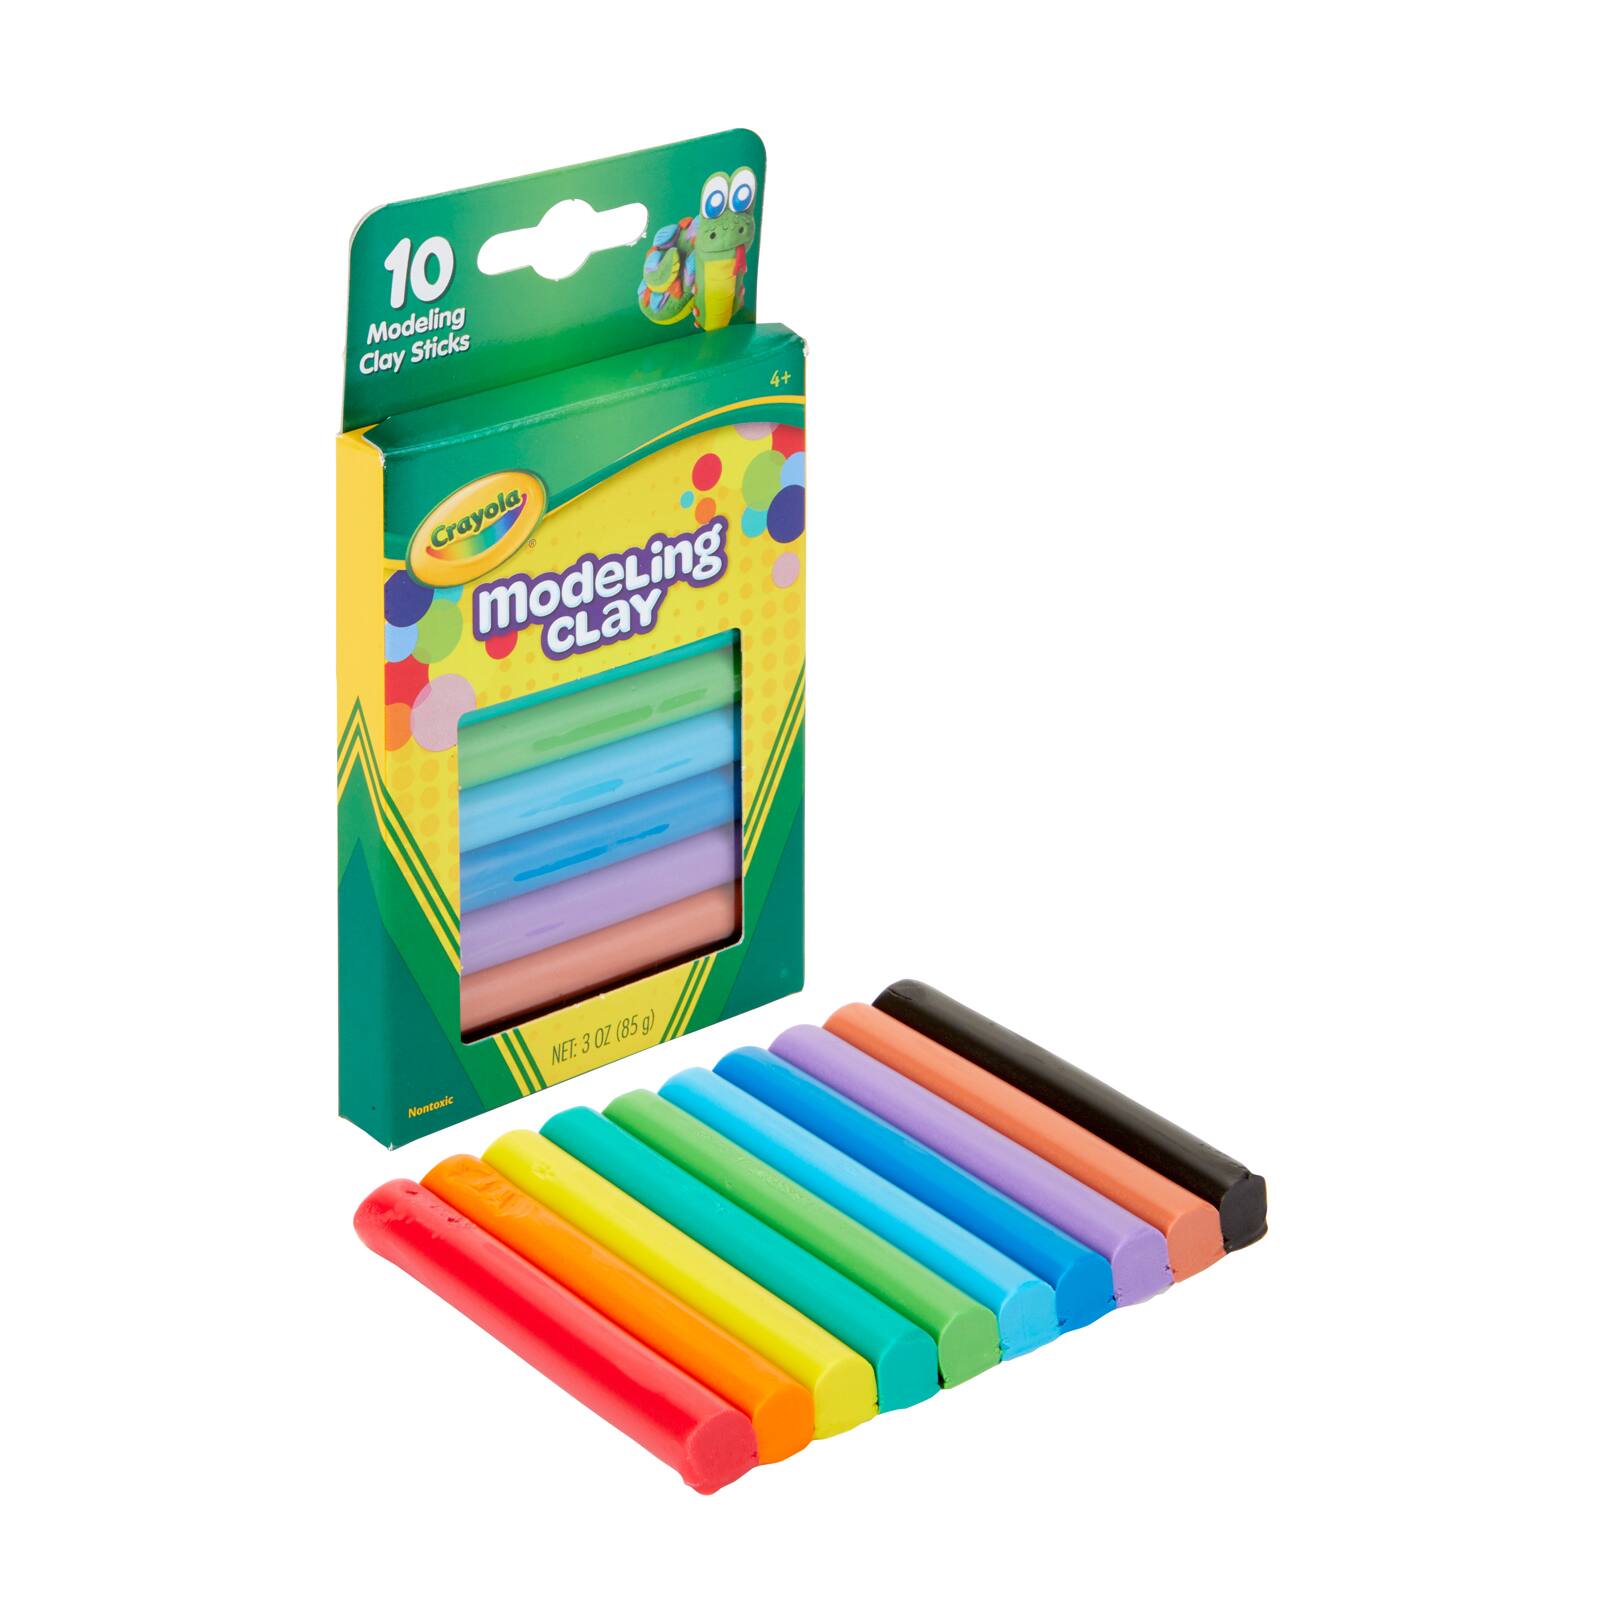 Crayola Modeling Clay 10 Sticks Multicolored Craft Set 3j for sale online 